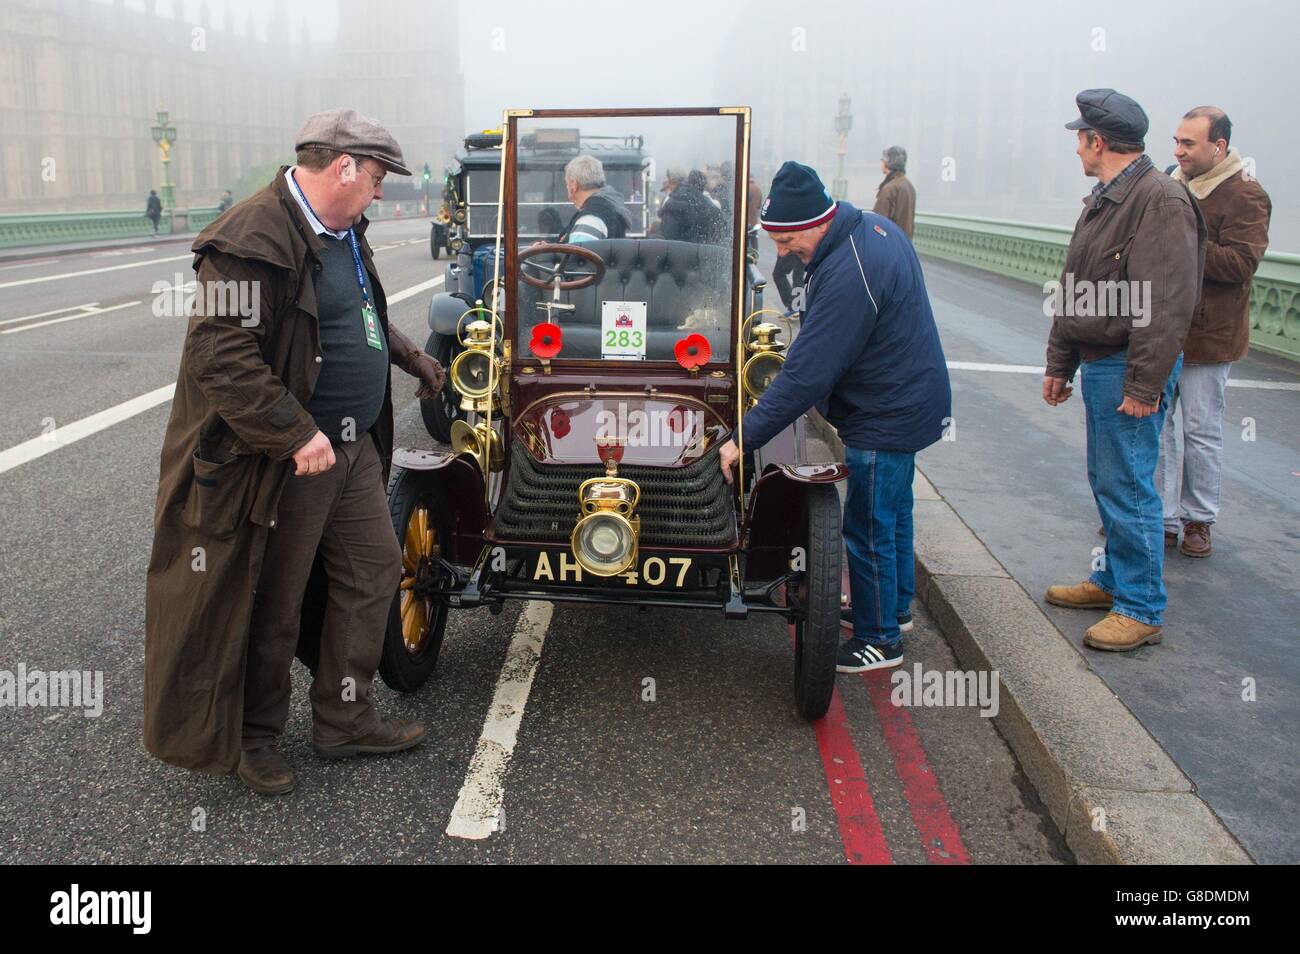 Participants in the Bonhams London to Brighton Veteran Car Run attempt to repair a broken down car on Westminster Bridge, London. Stock Photo